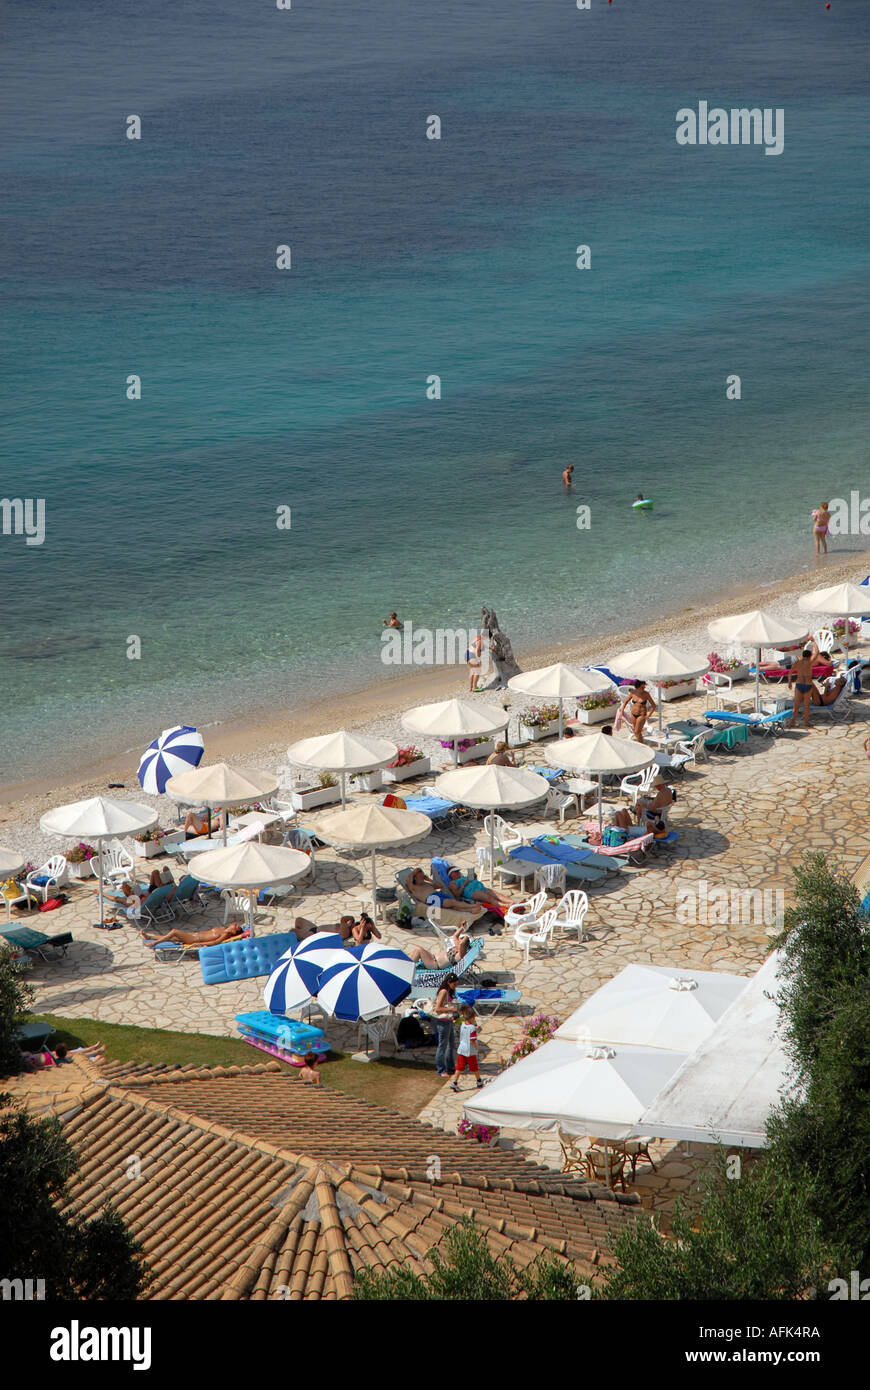 High view of pool-side umbrellas, beach and sea, Nissaki Beach, Corfu, Greece with people sun bathing and swimming Stock Photo